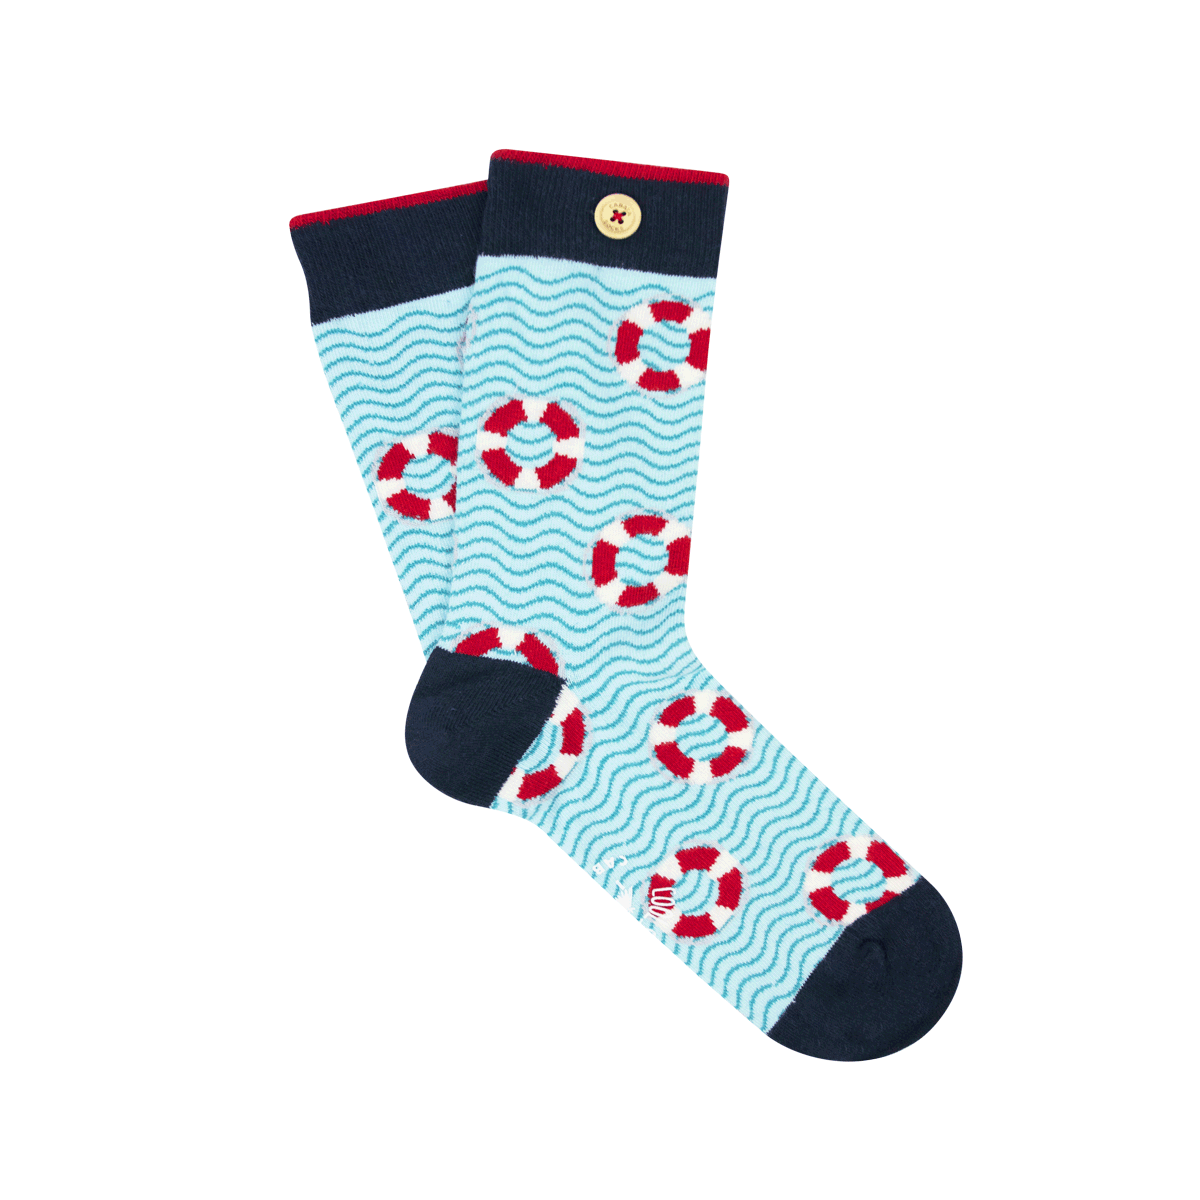 unlosable-socks-wood-button-men-41-46-socks20-vinc-sok-lblue